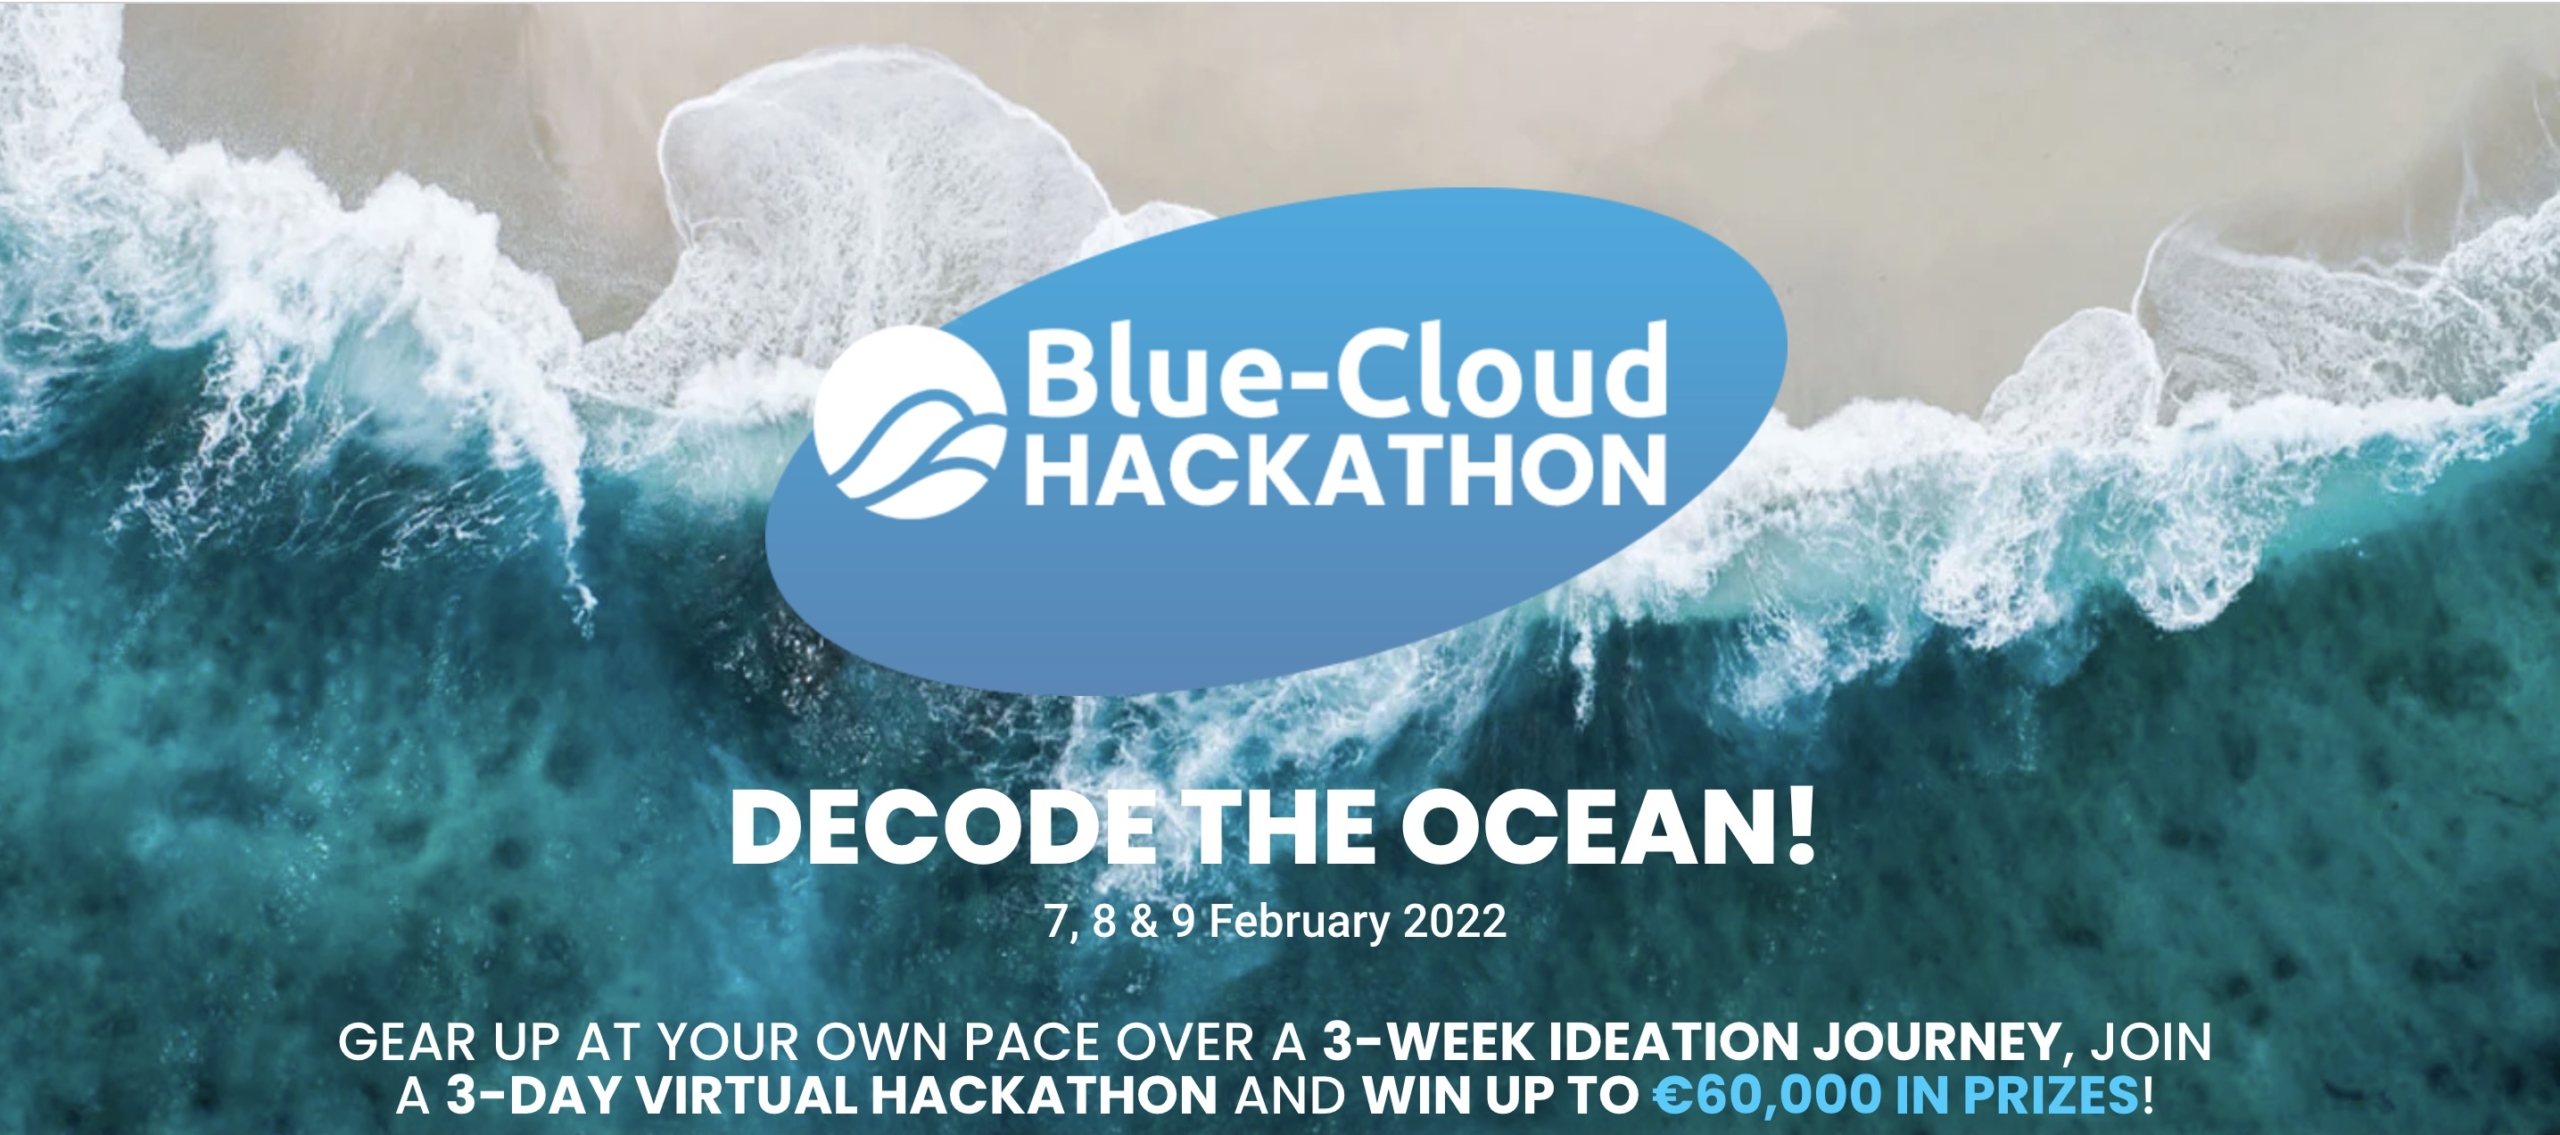 Decode the Ocean! The Blue-Cloud hackathon